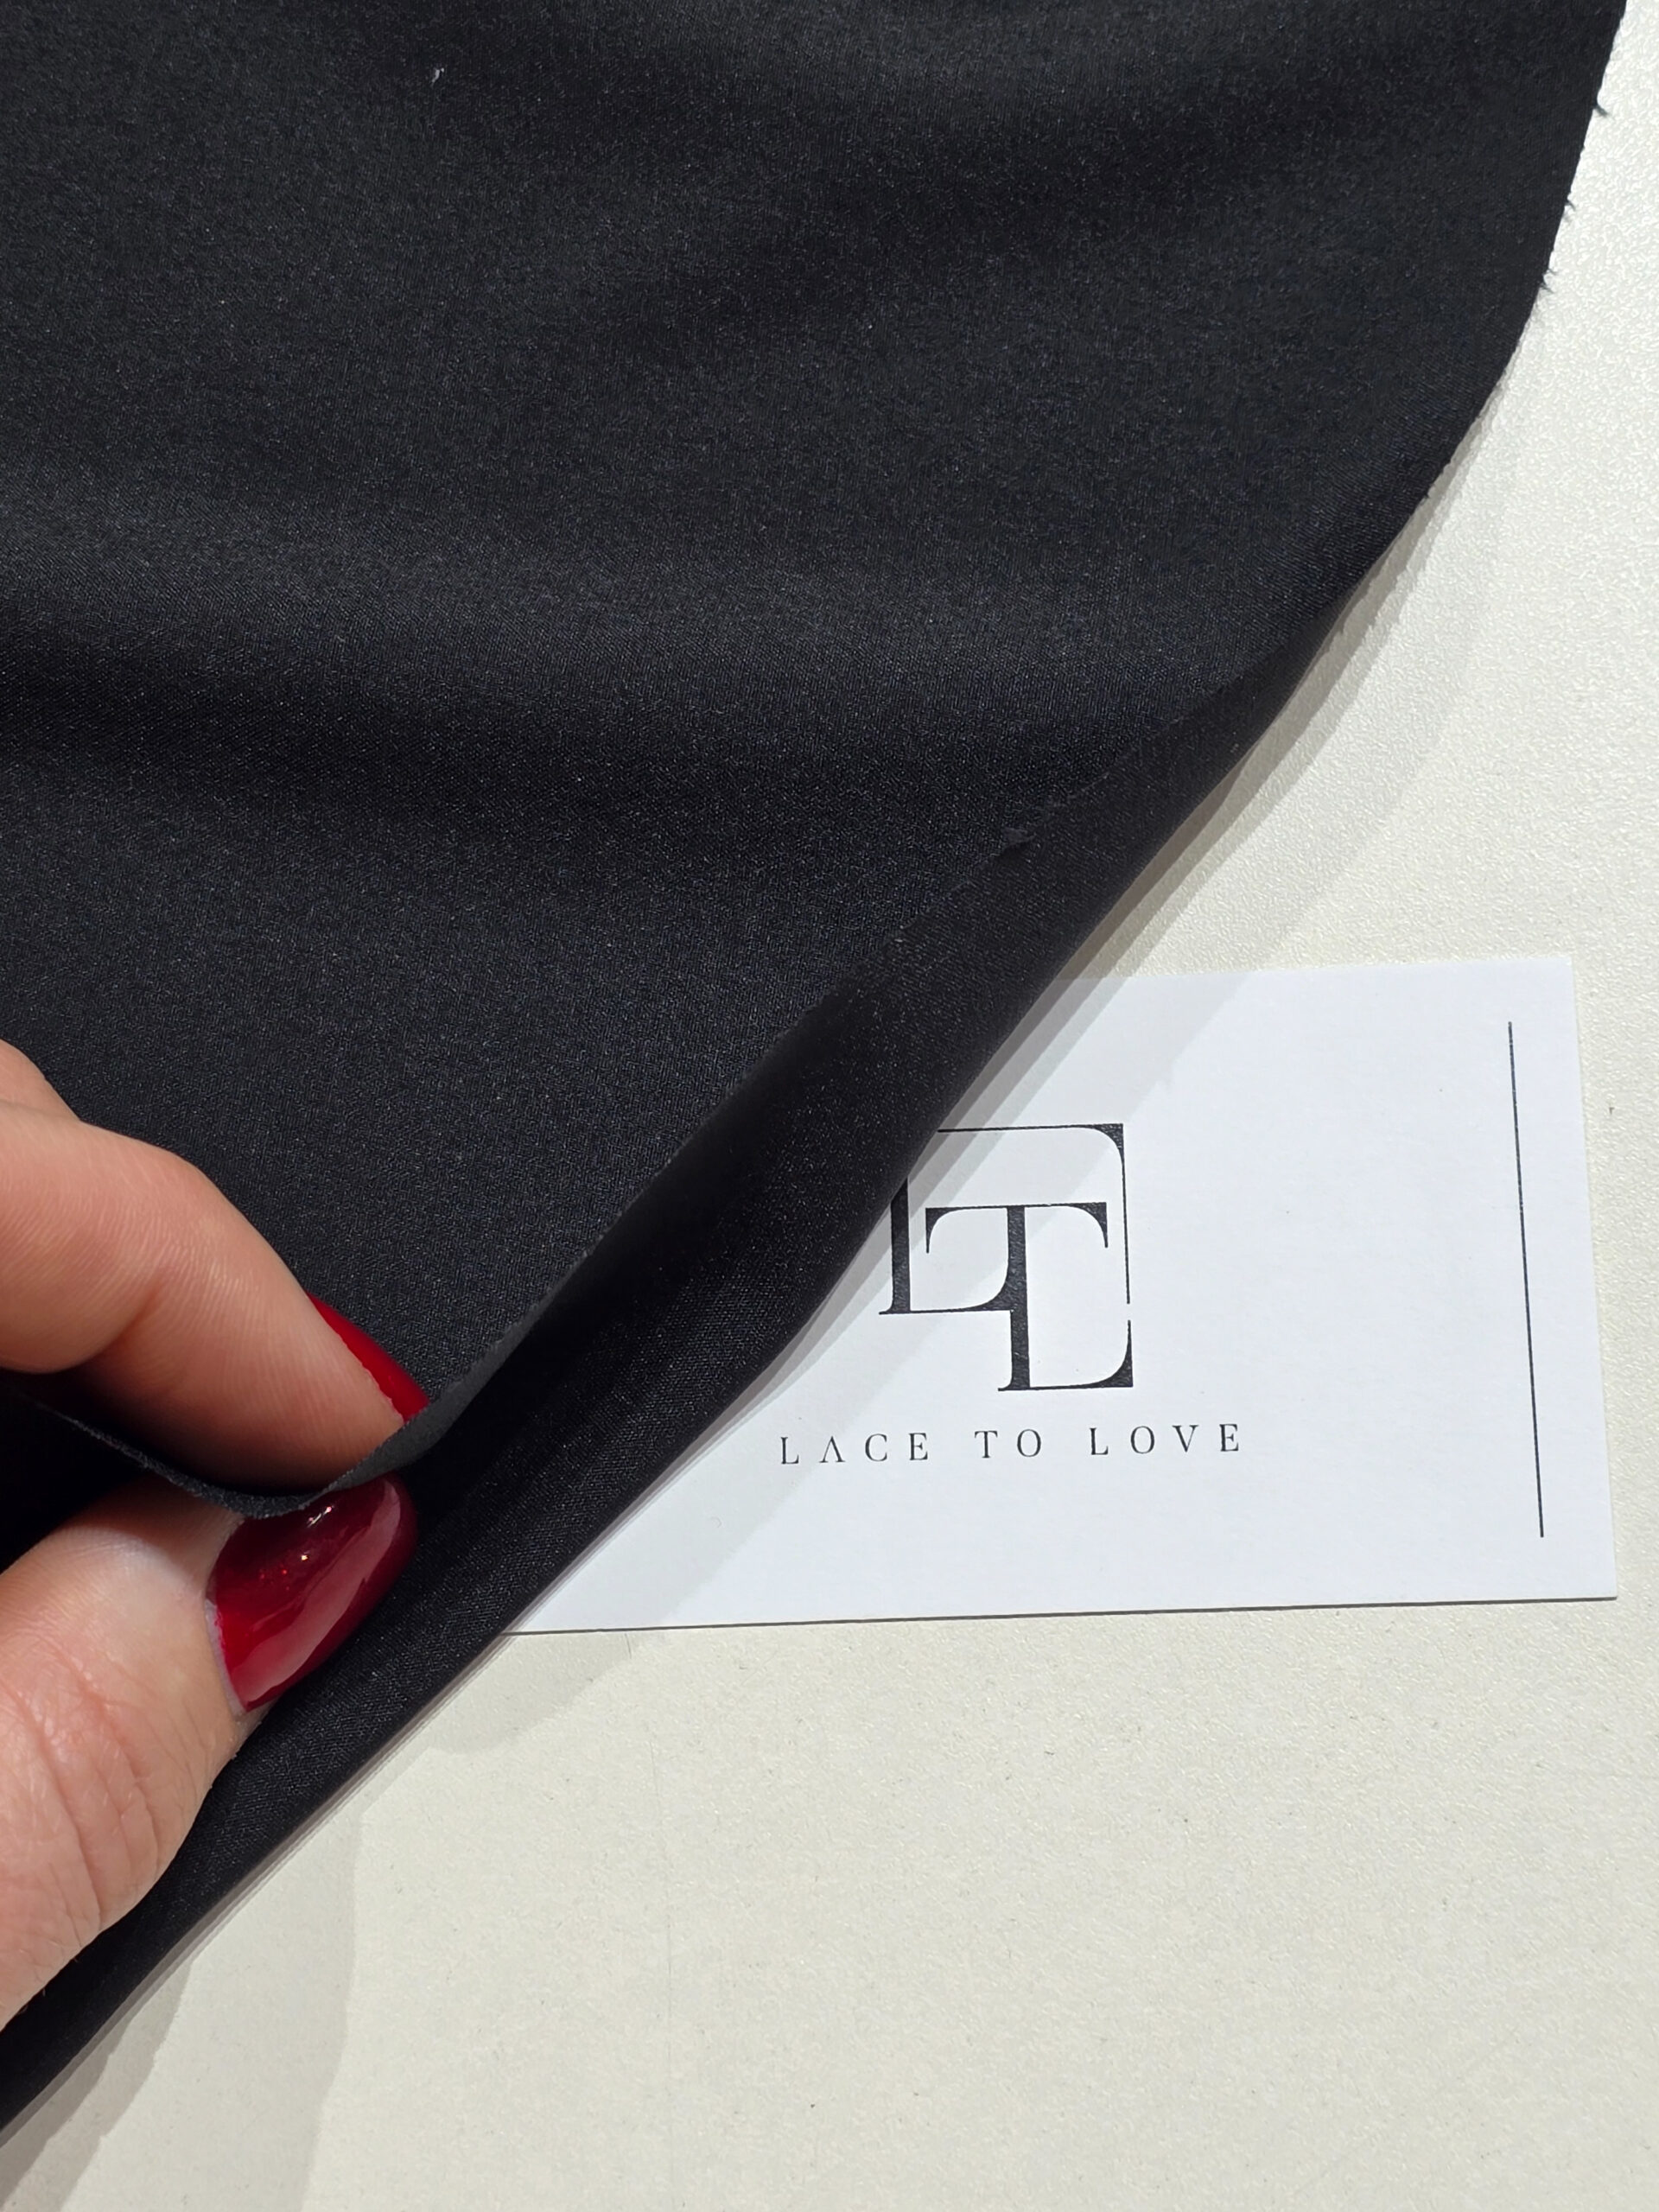 Black delicate elastic crepe chiffon fabric